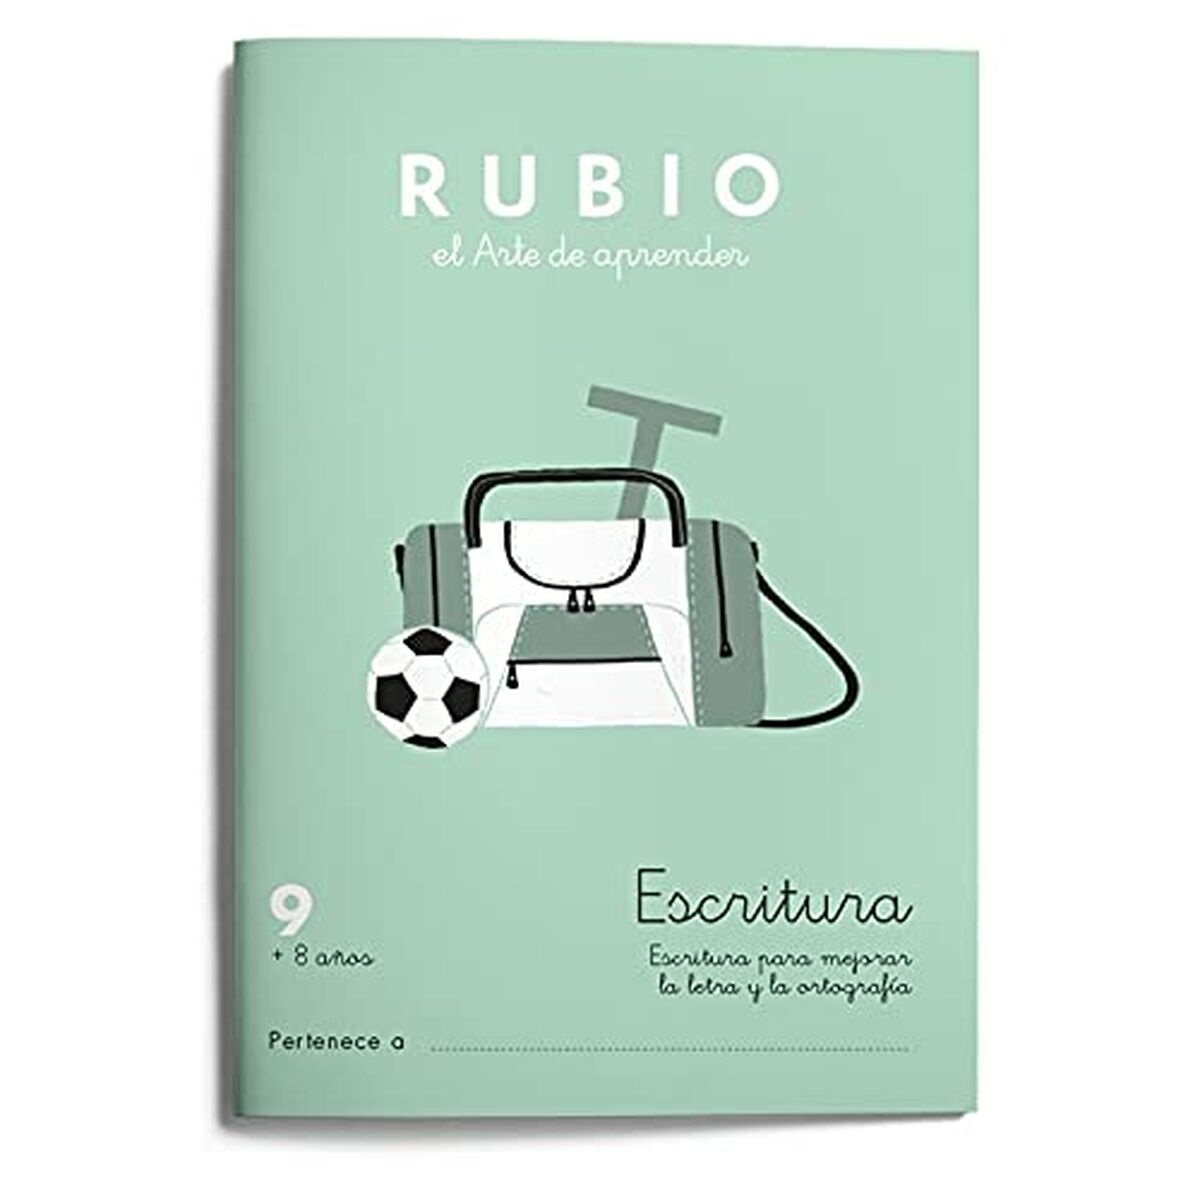 Writing and calligraphy notebook Rubio Nº9 A5 spanska 20 Blad (10 antal)-Kontor och Kontorsmaterial, Pappersprodukter för kontoret-Cuadernos Rubio-peaceofhome.se